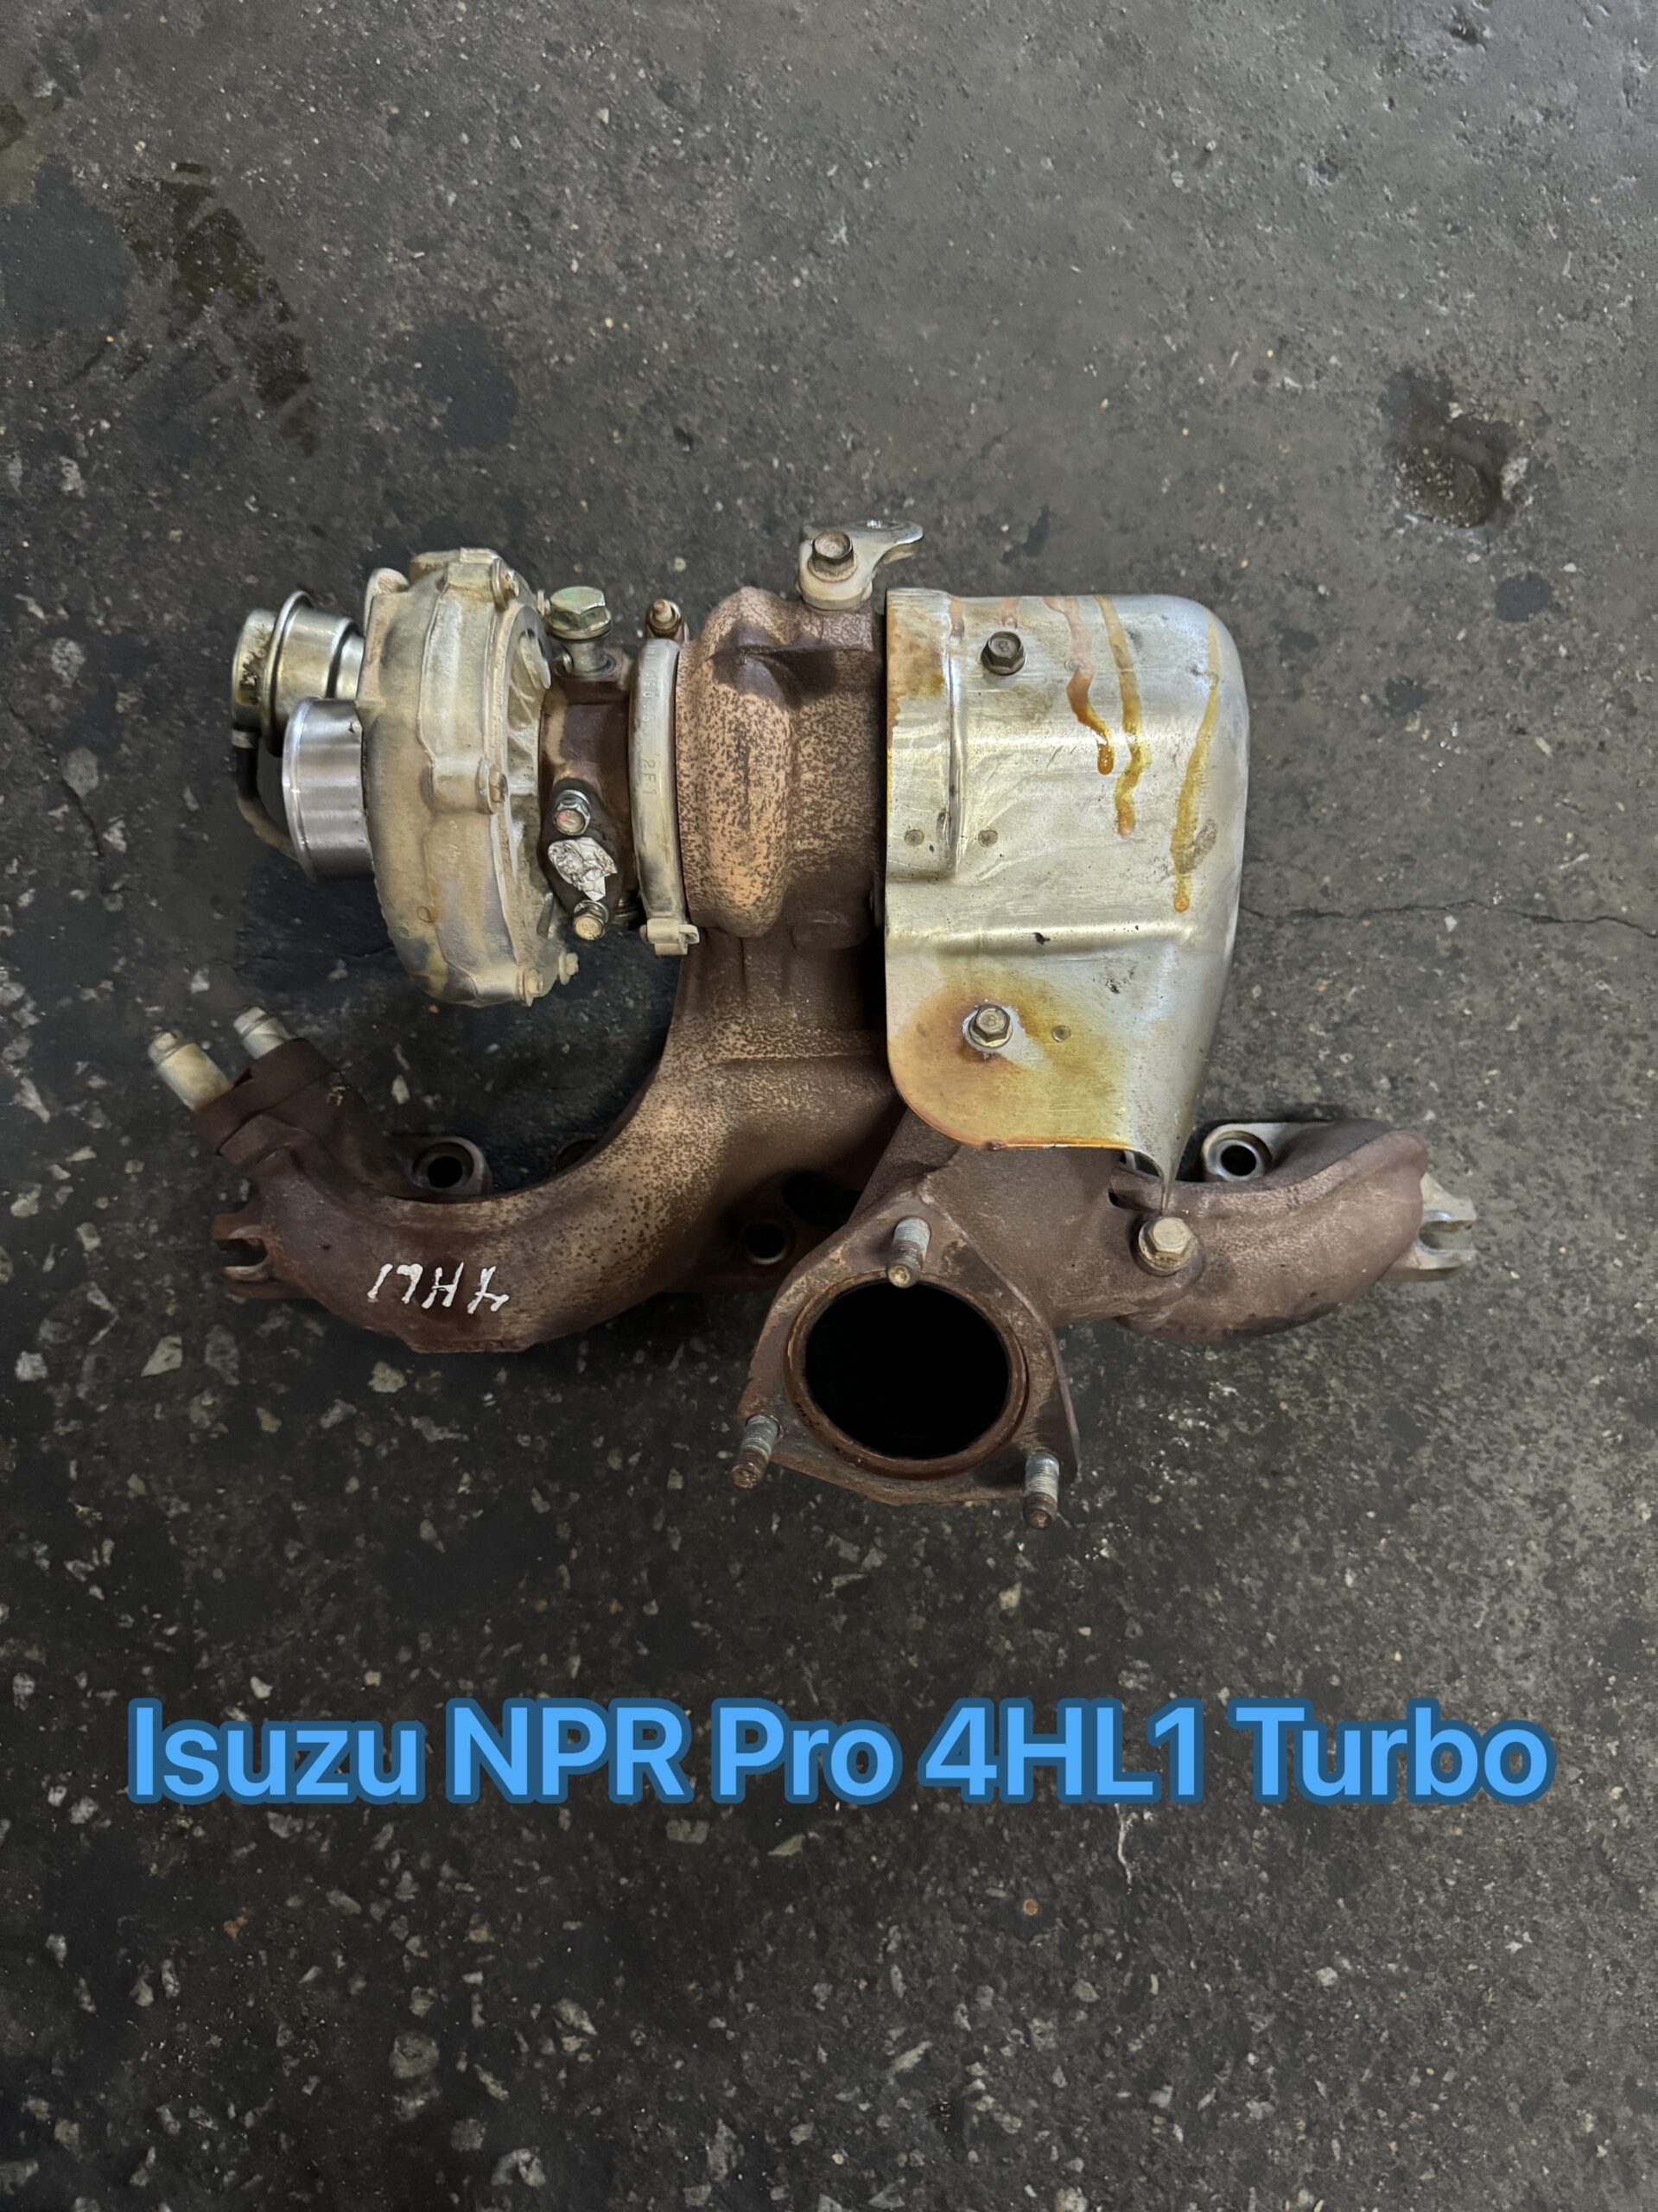 Isuzu NPR Pro 4HL1 Turbo